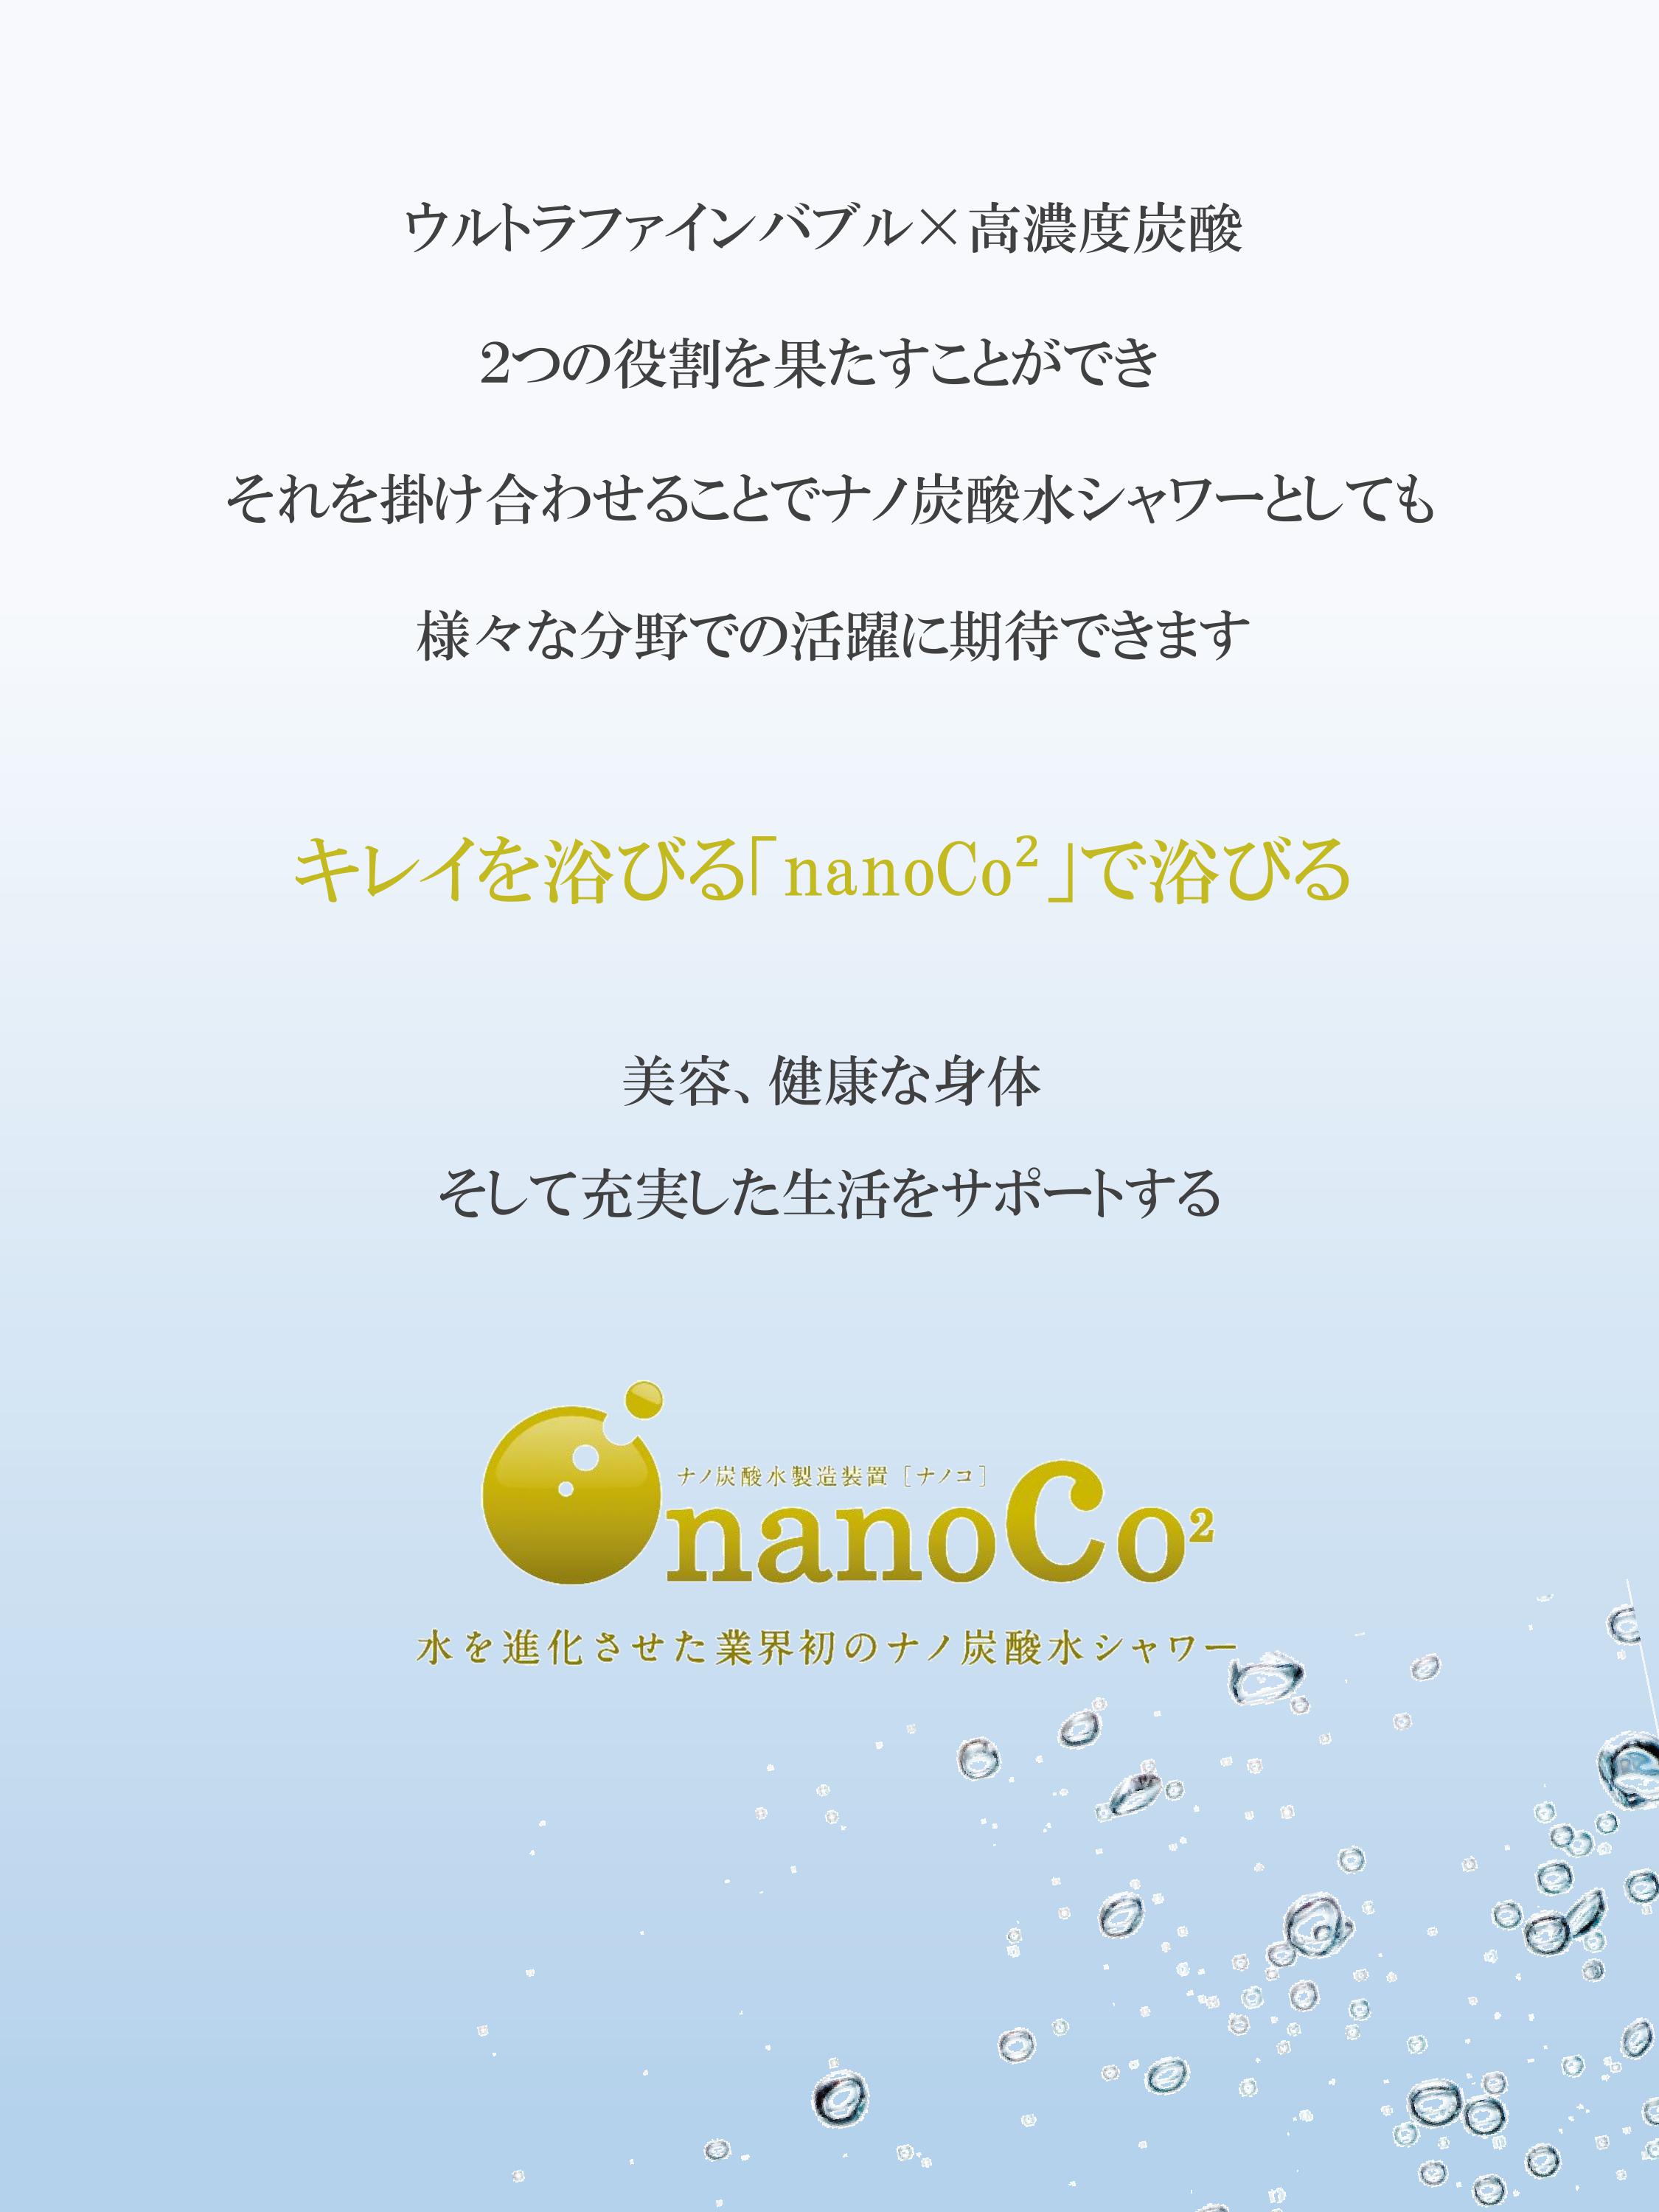 ナノ炭酸水製造装置 nanoCo